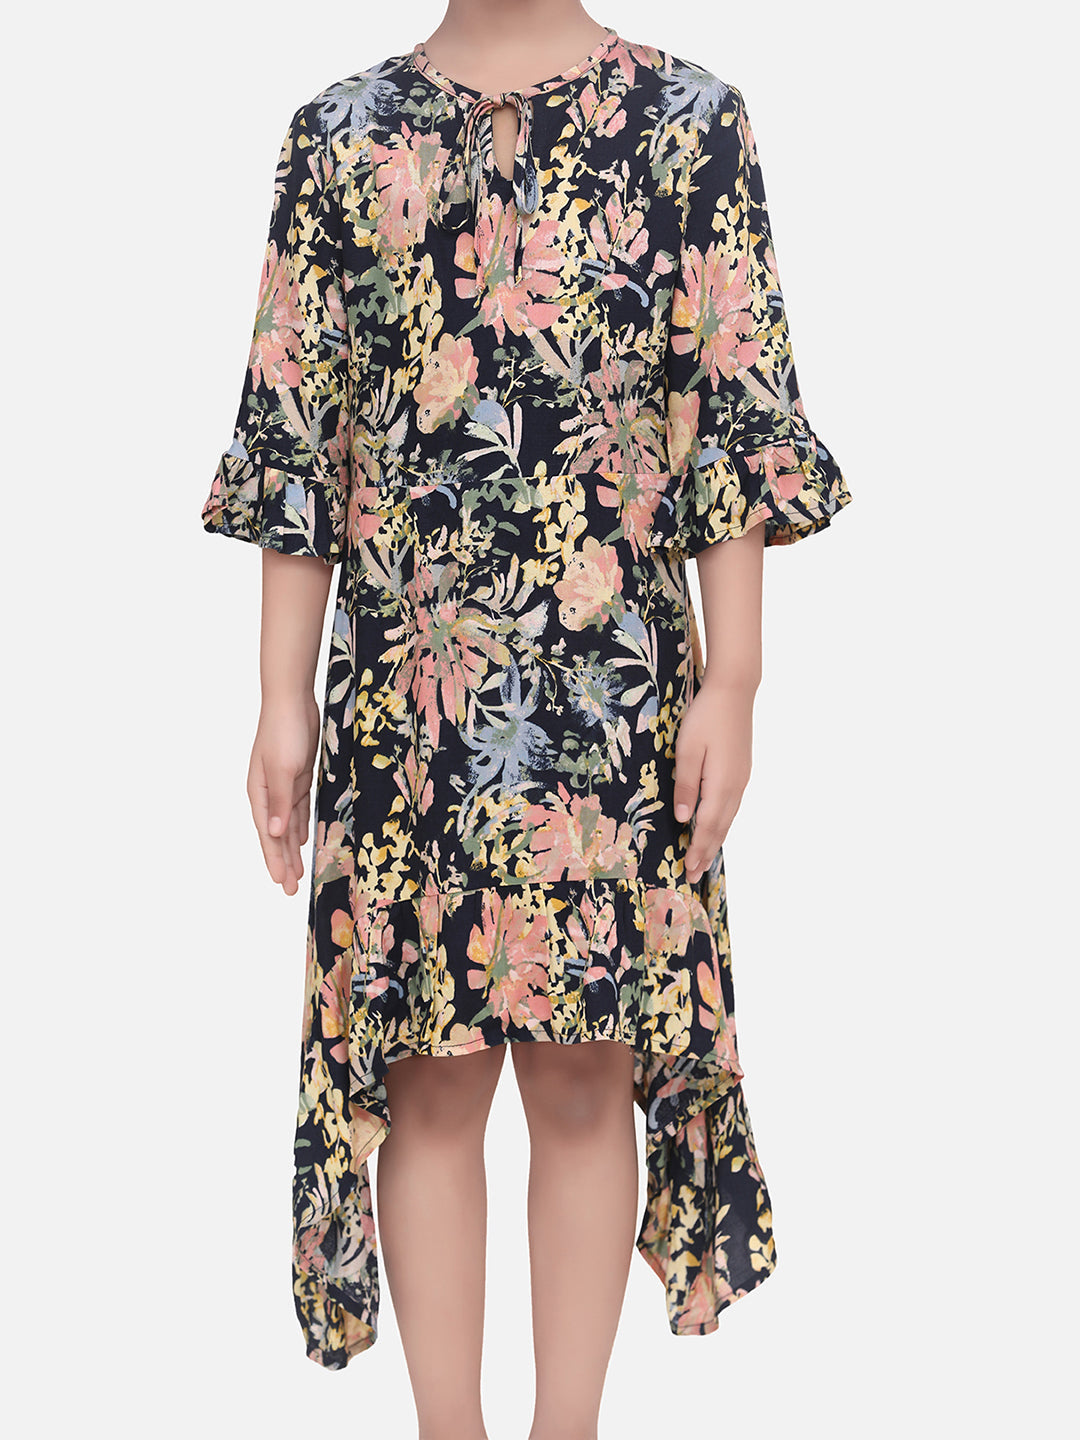 Gils Floral Dress with Asymmetric Hemline